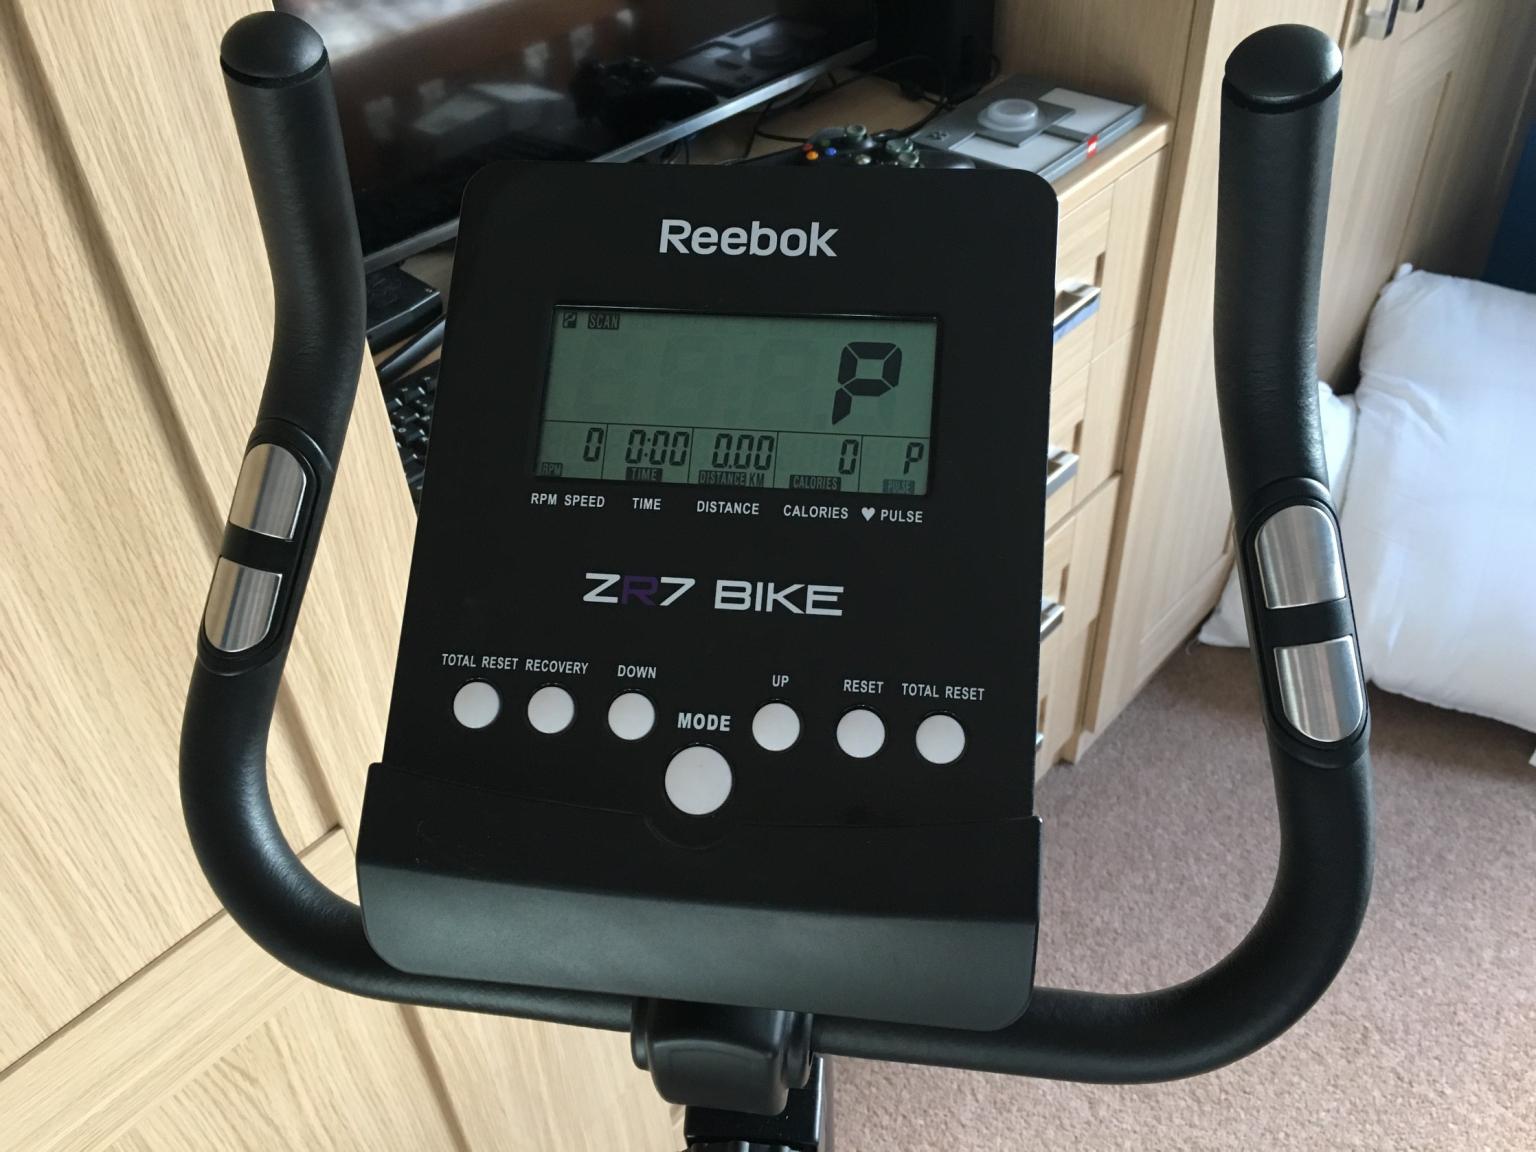 reebok zr7 exercise bike